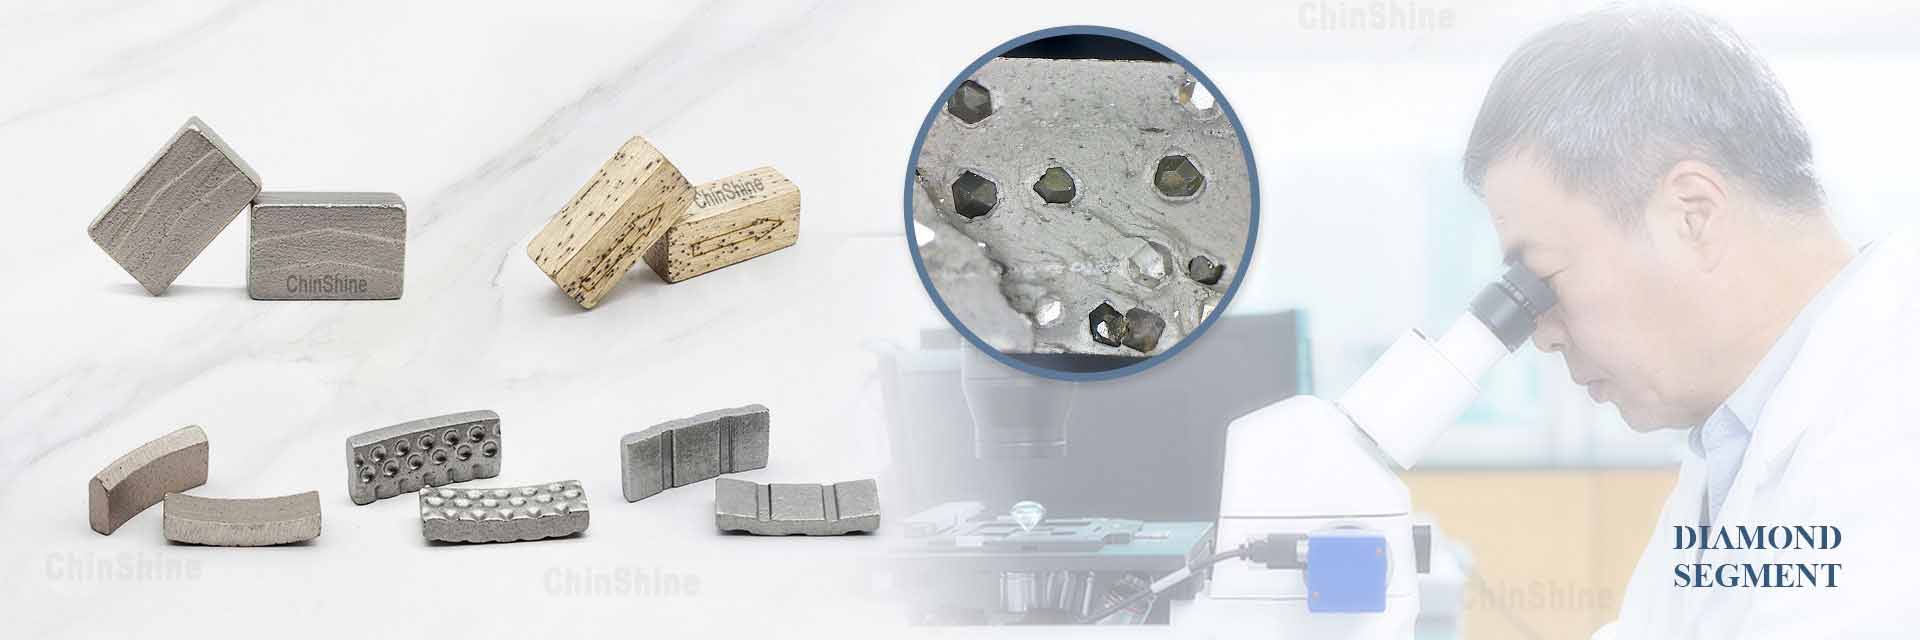 China stone diamond segments